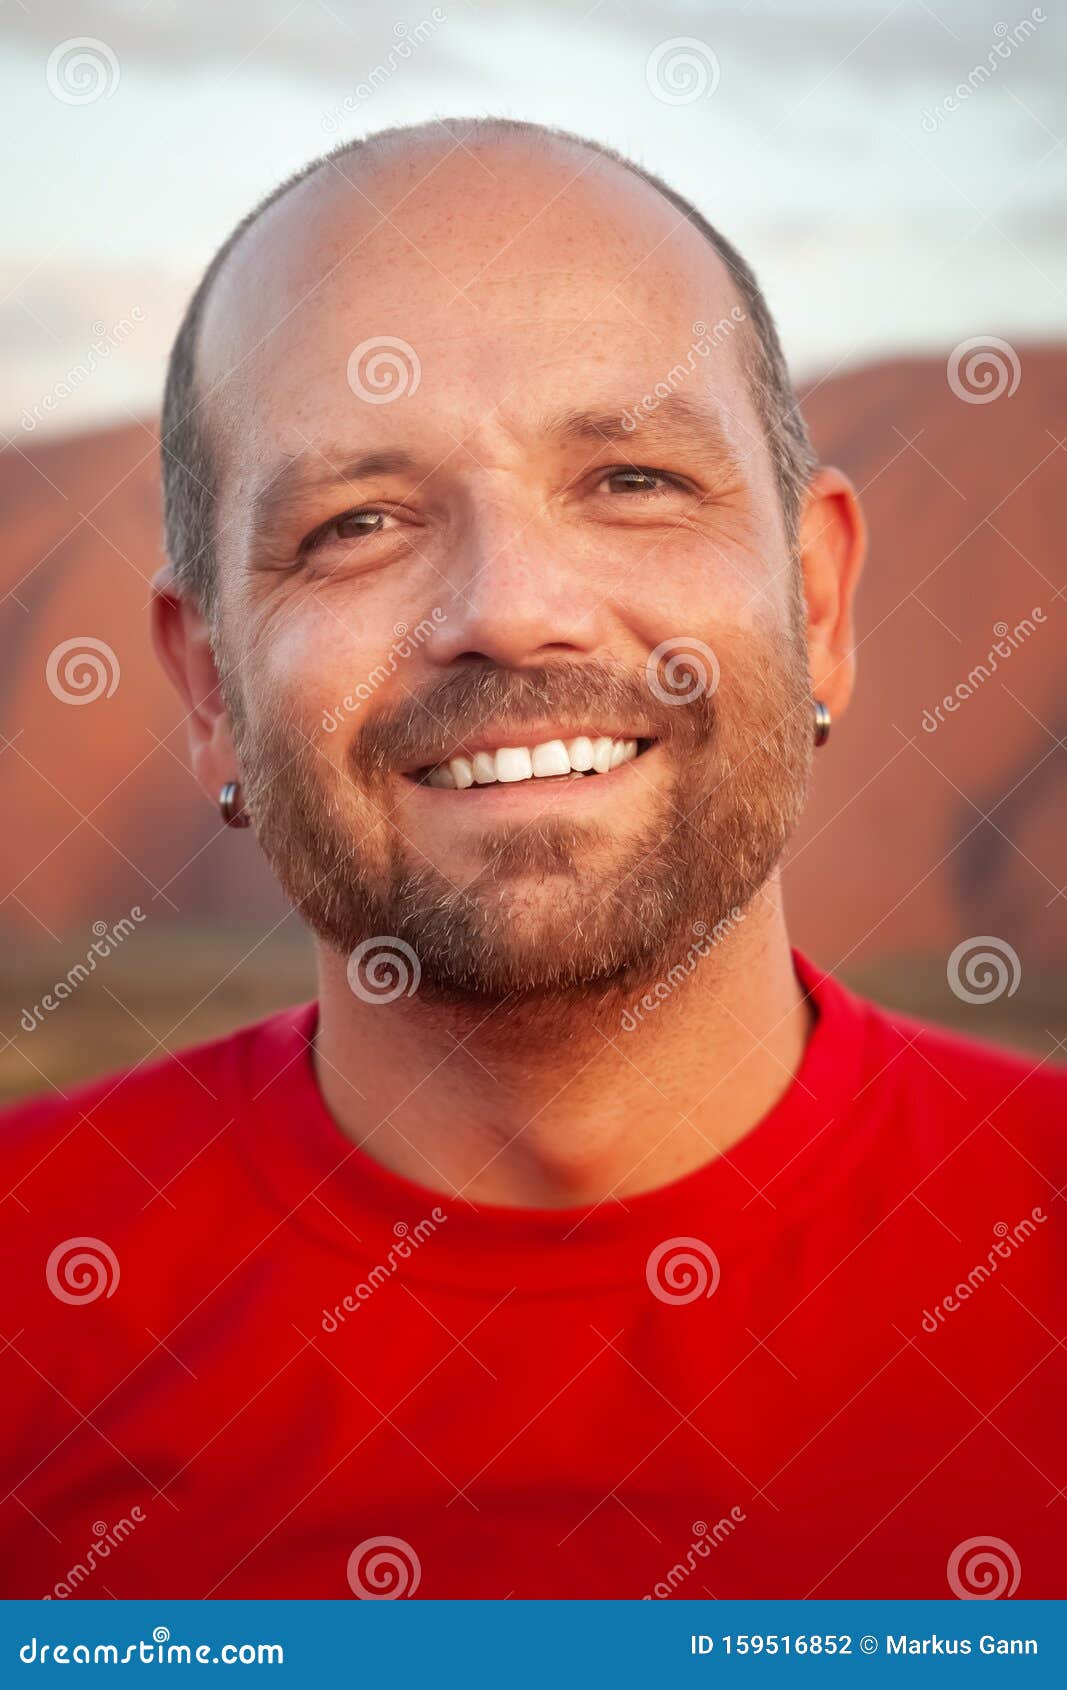 Handsome Smiling Man Portrait Stock Photo - Image of warm, portrait ...